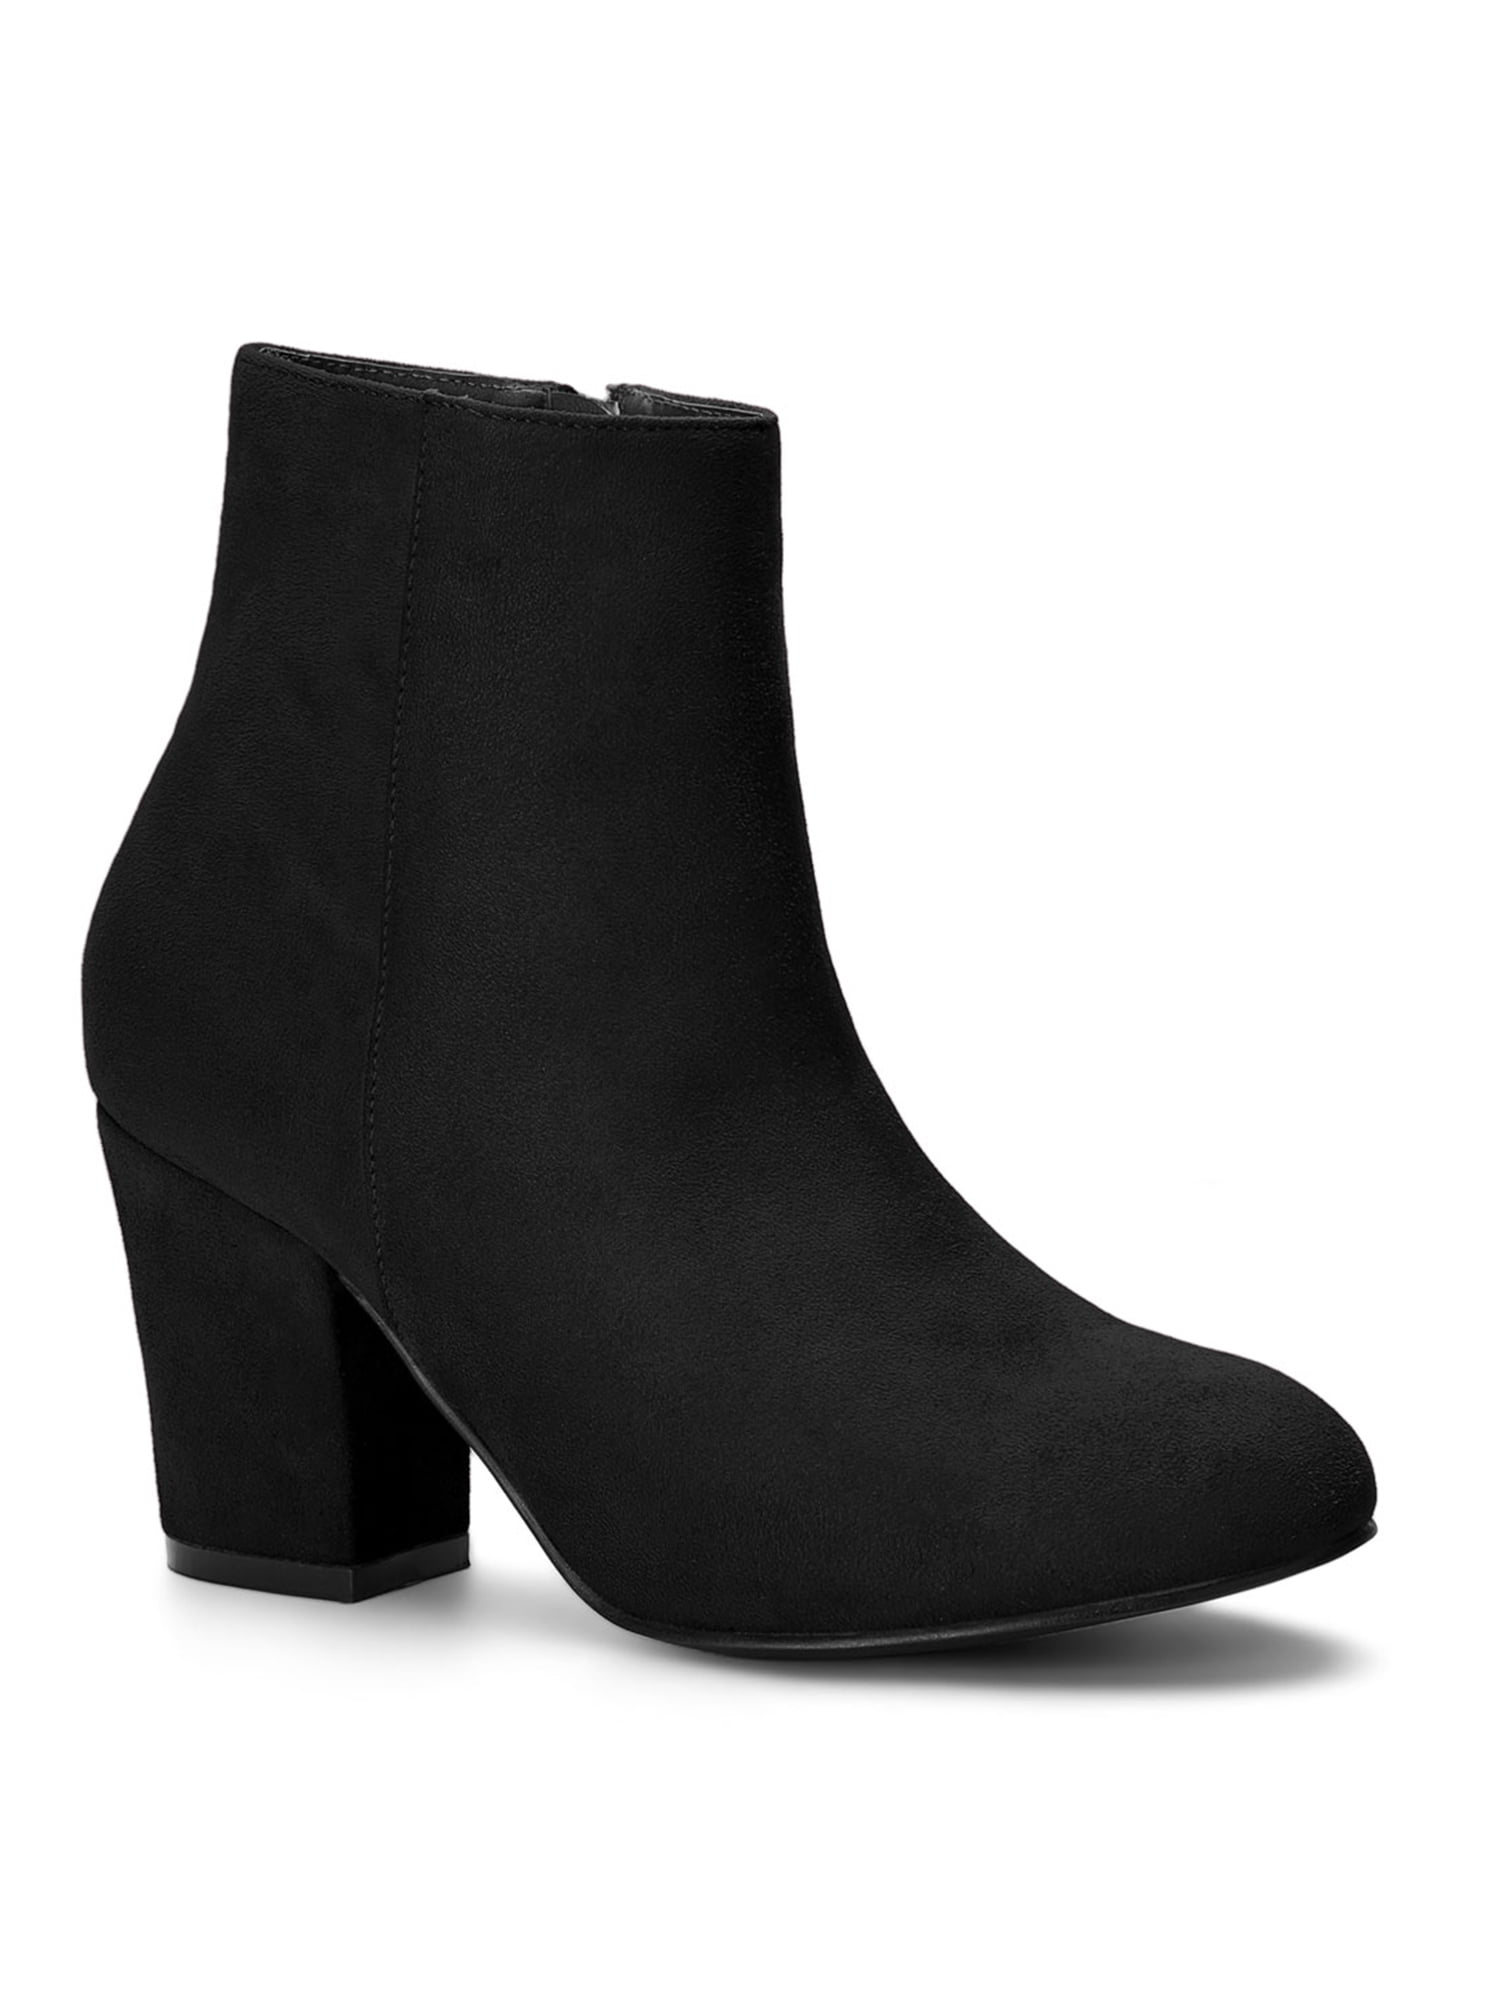 Allegra K Women's Side Zipper Block Heel Ankle Boots - Walmart.com